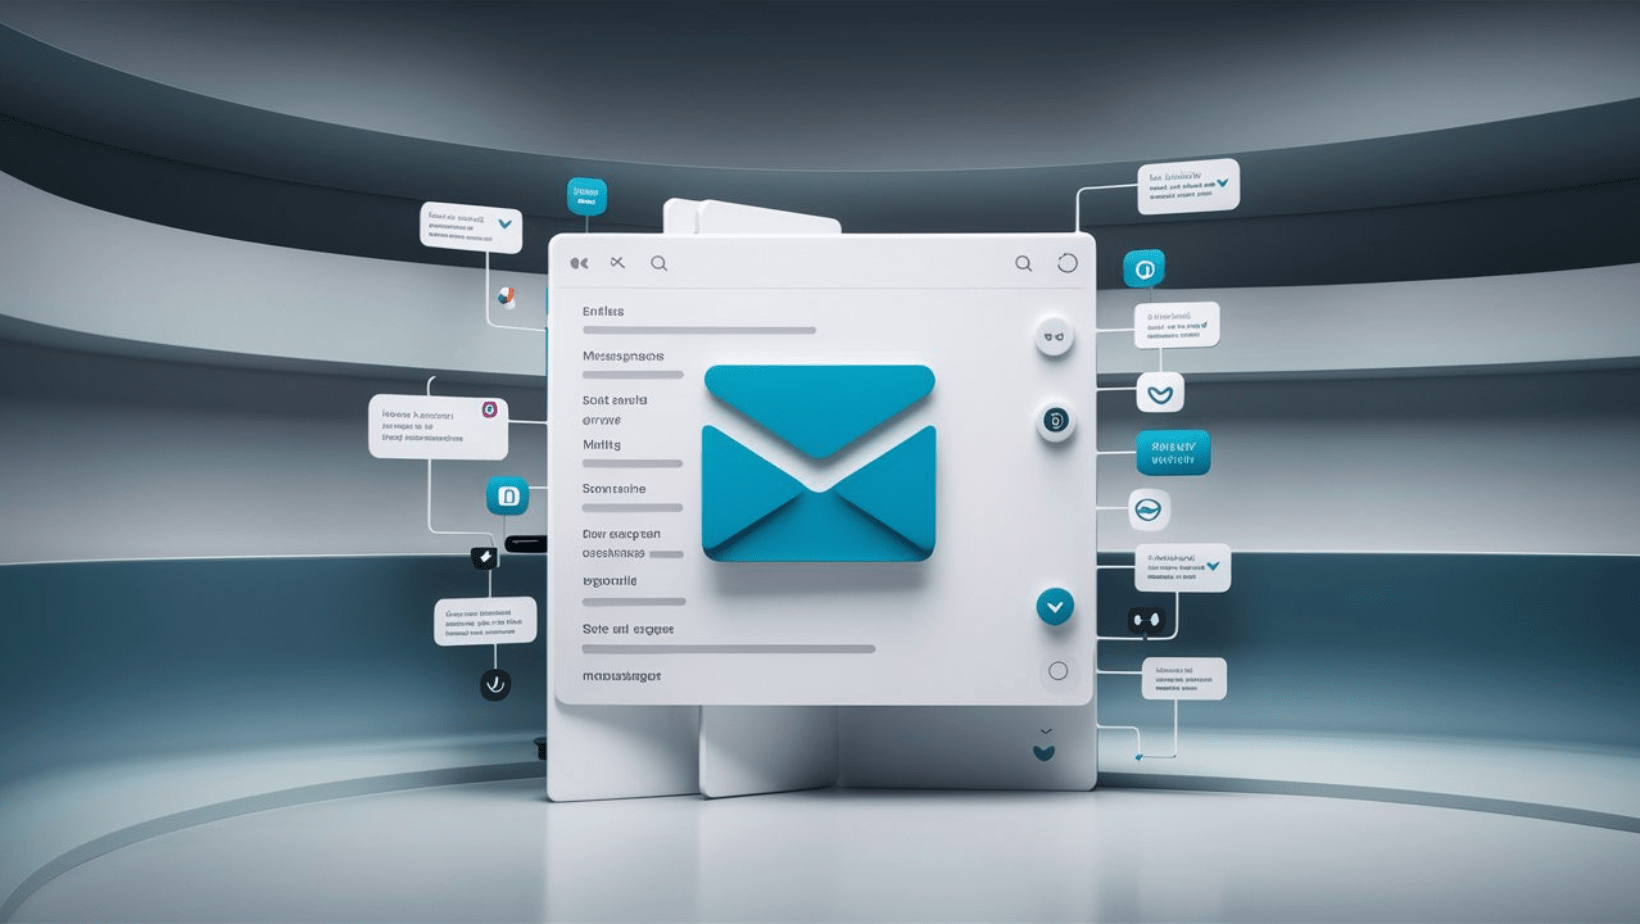 Email integration